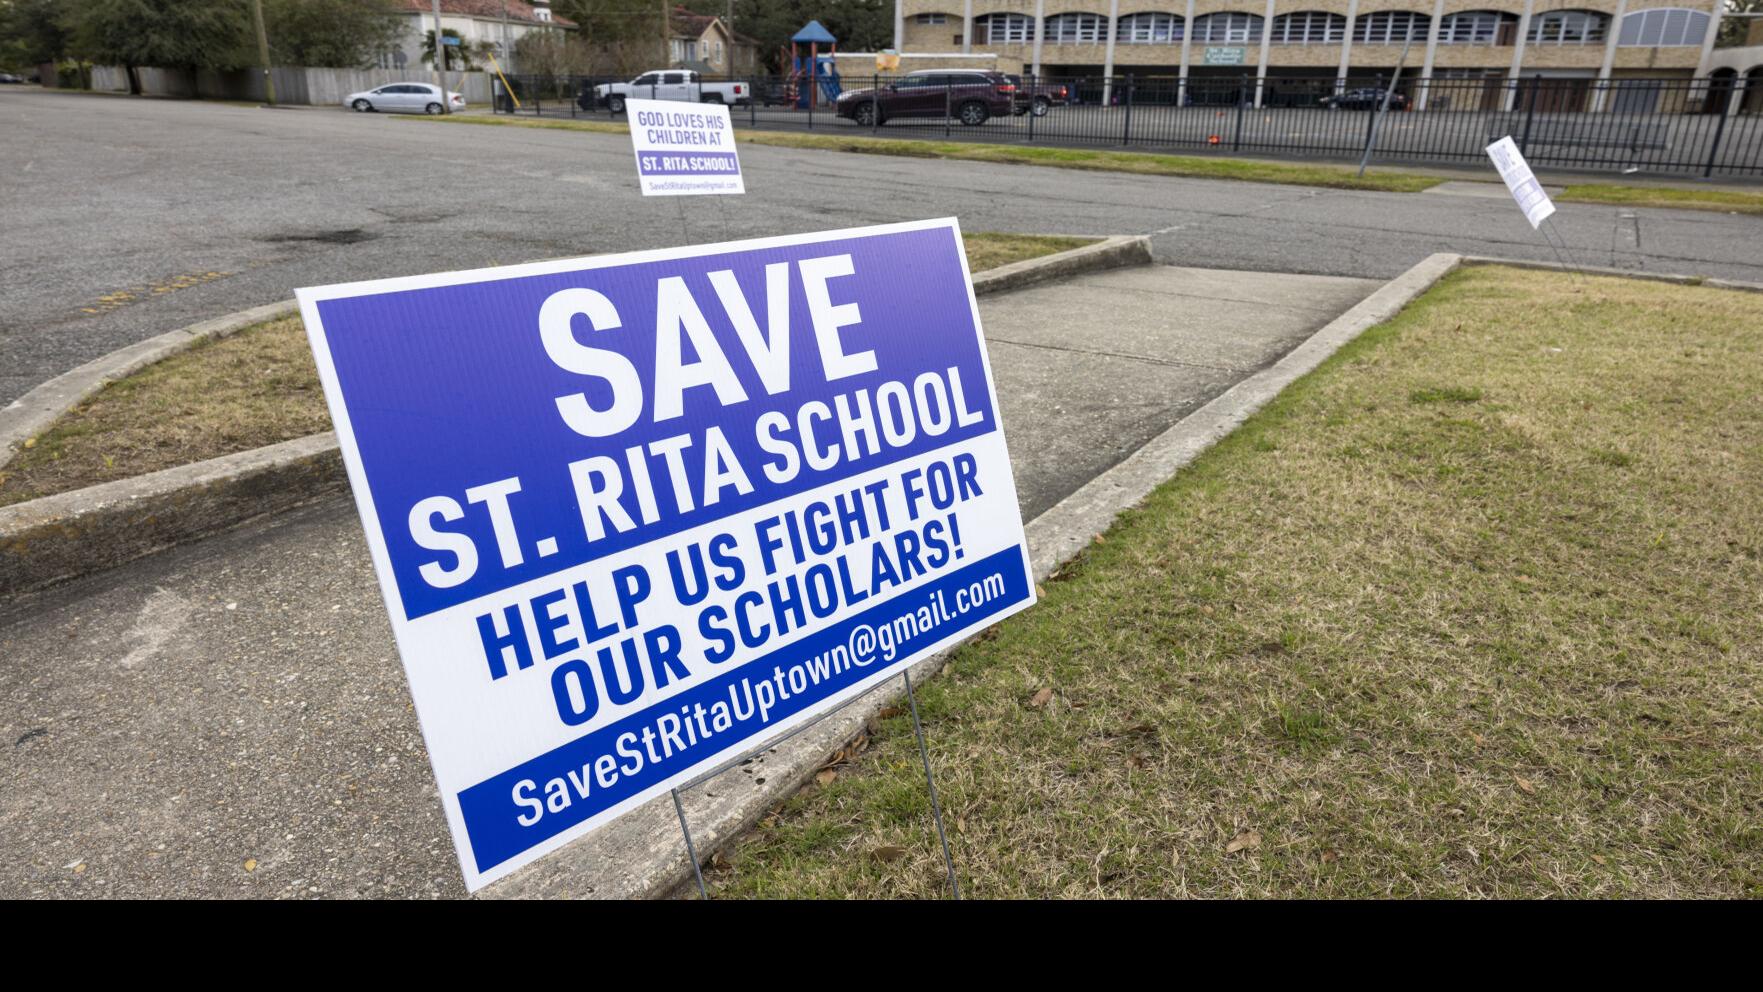 Our Campus Facilities — St Rita High School